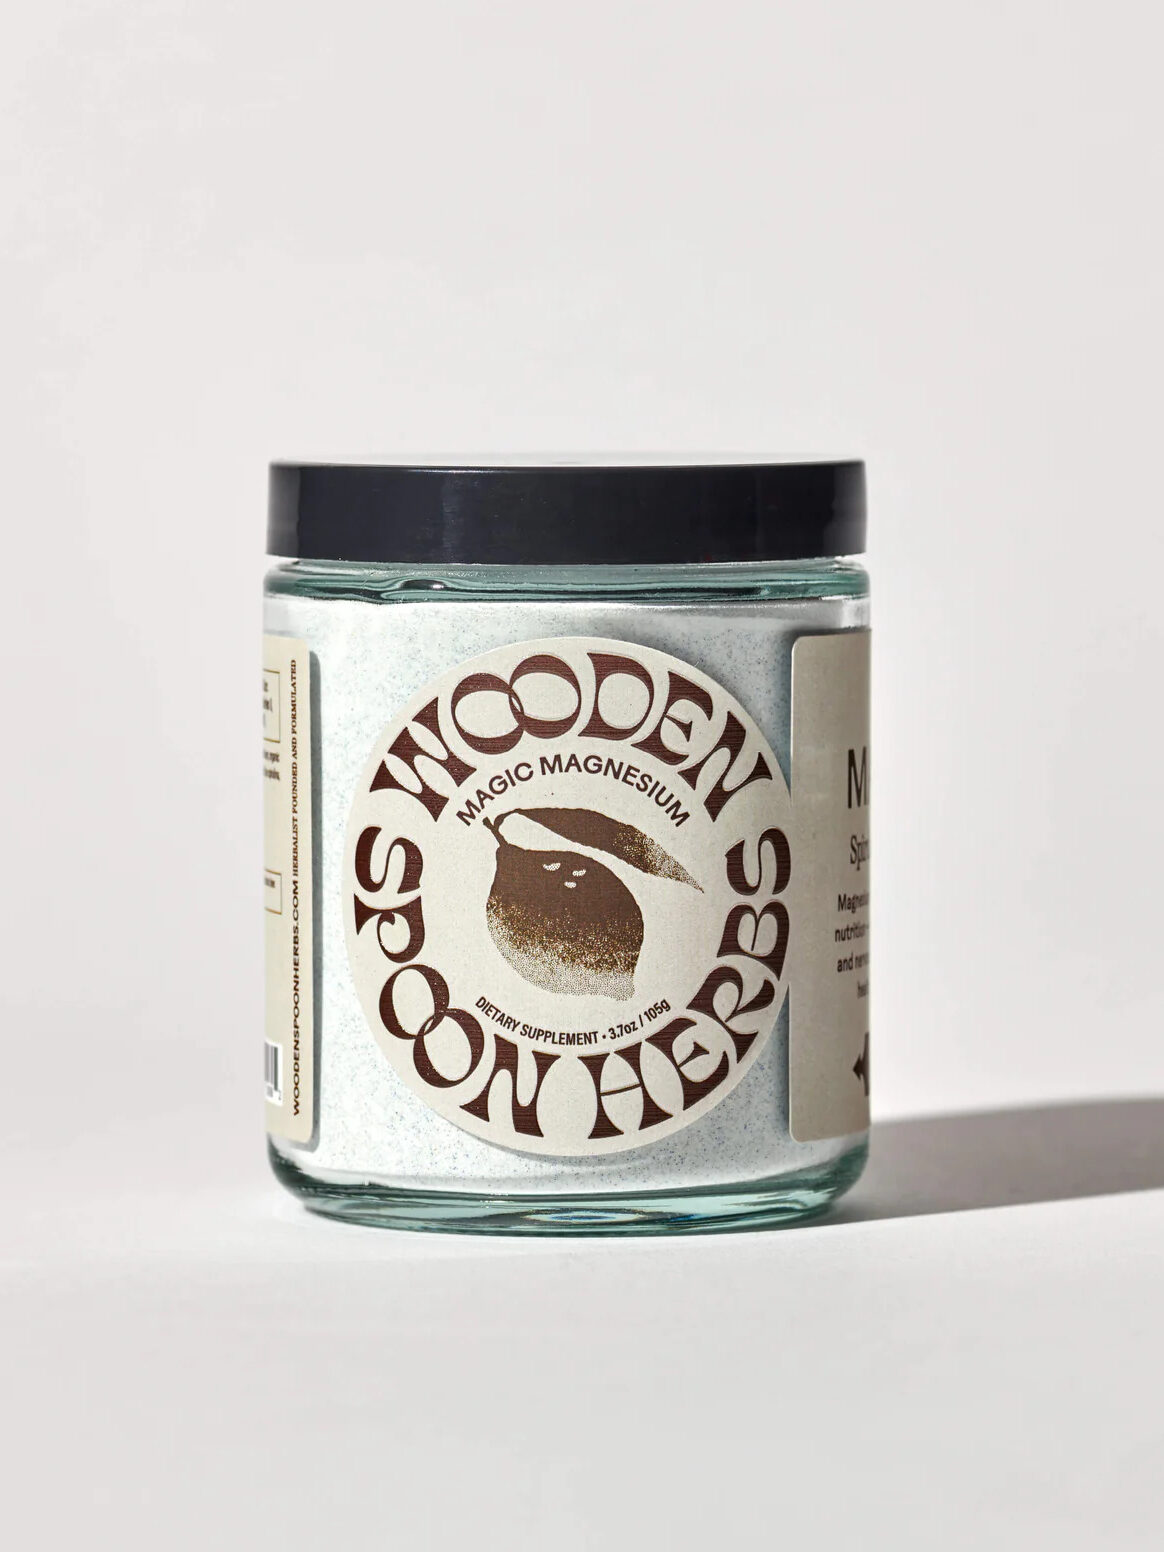 A jar of Wooden Spoon Herbs Magic Magnesium.